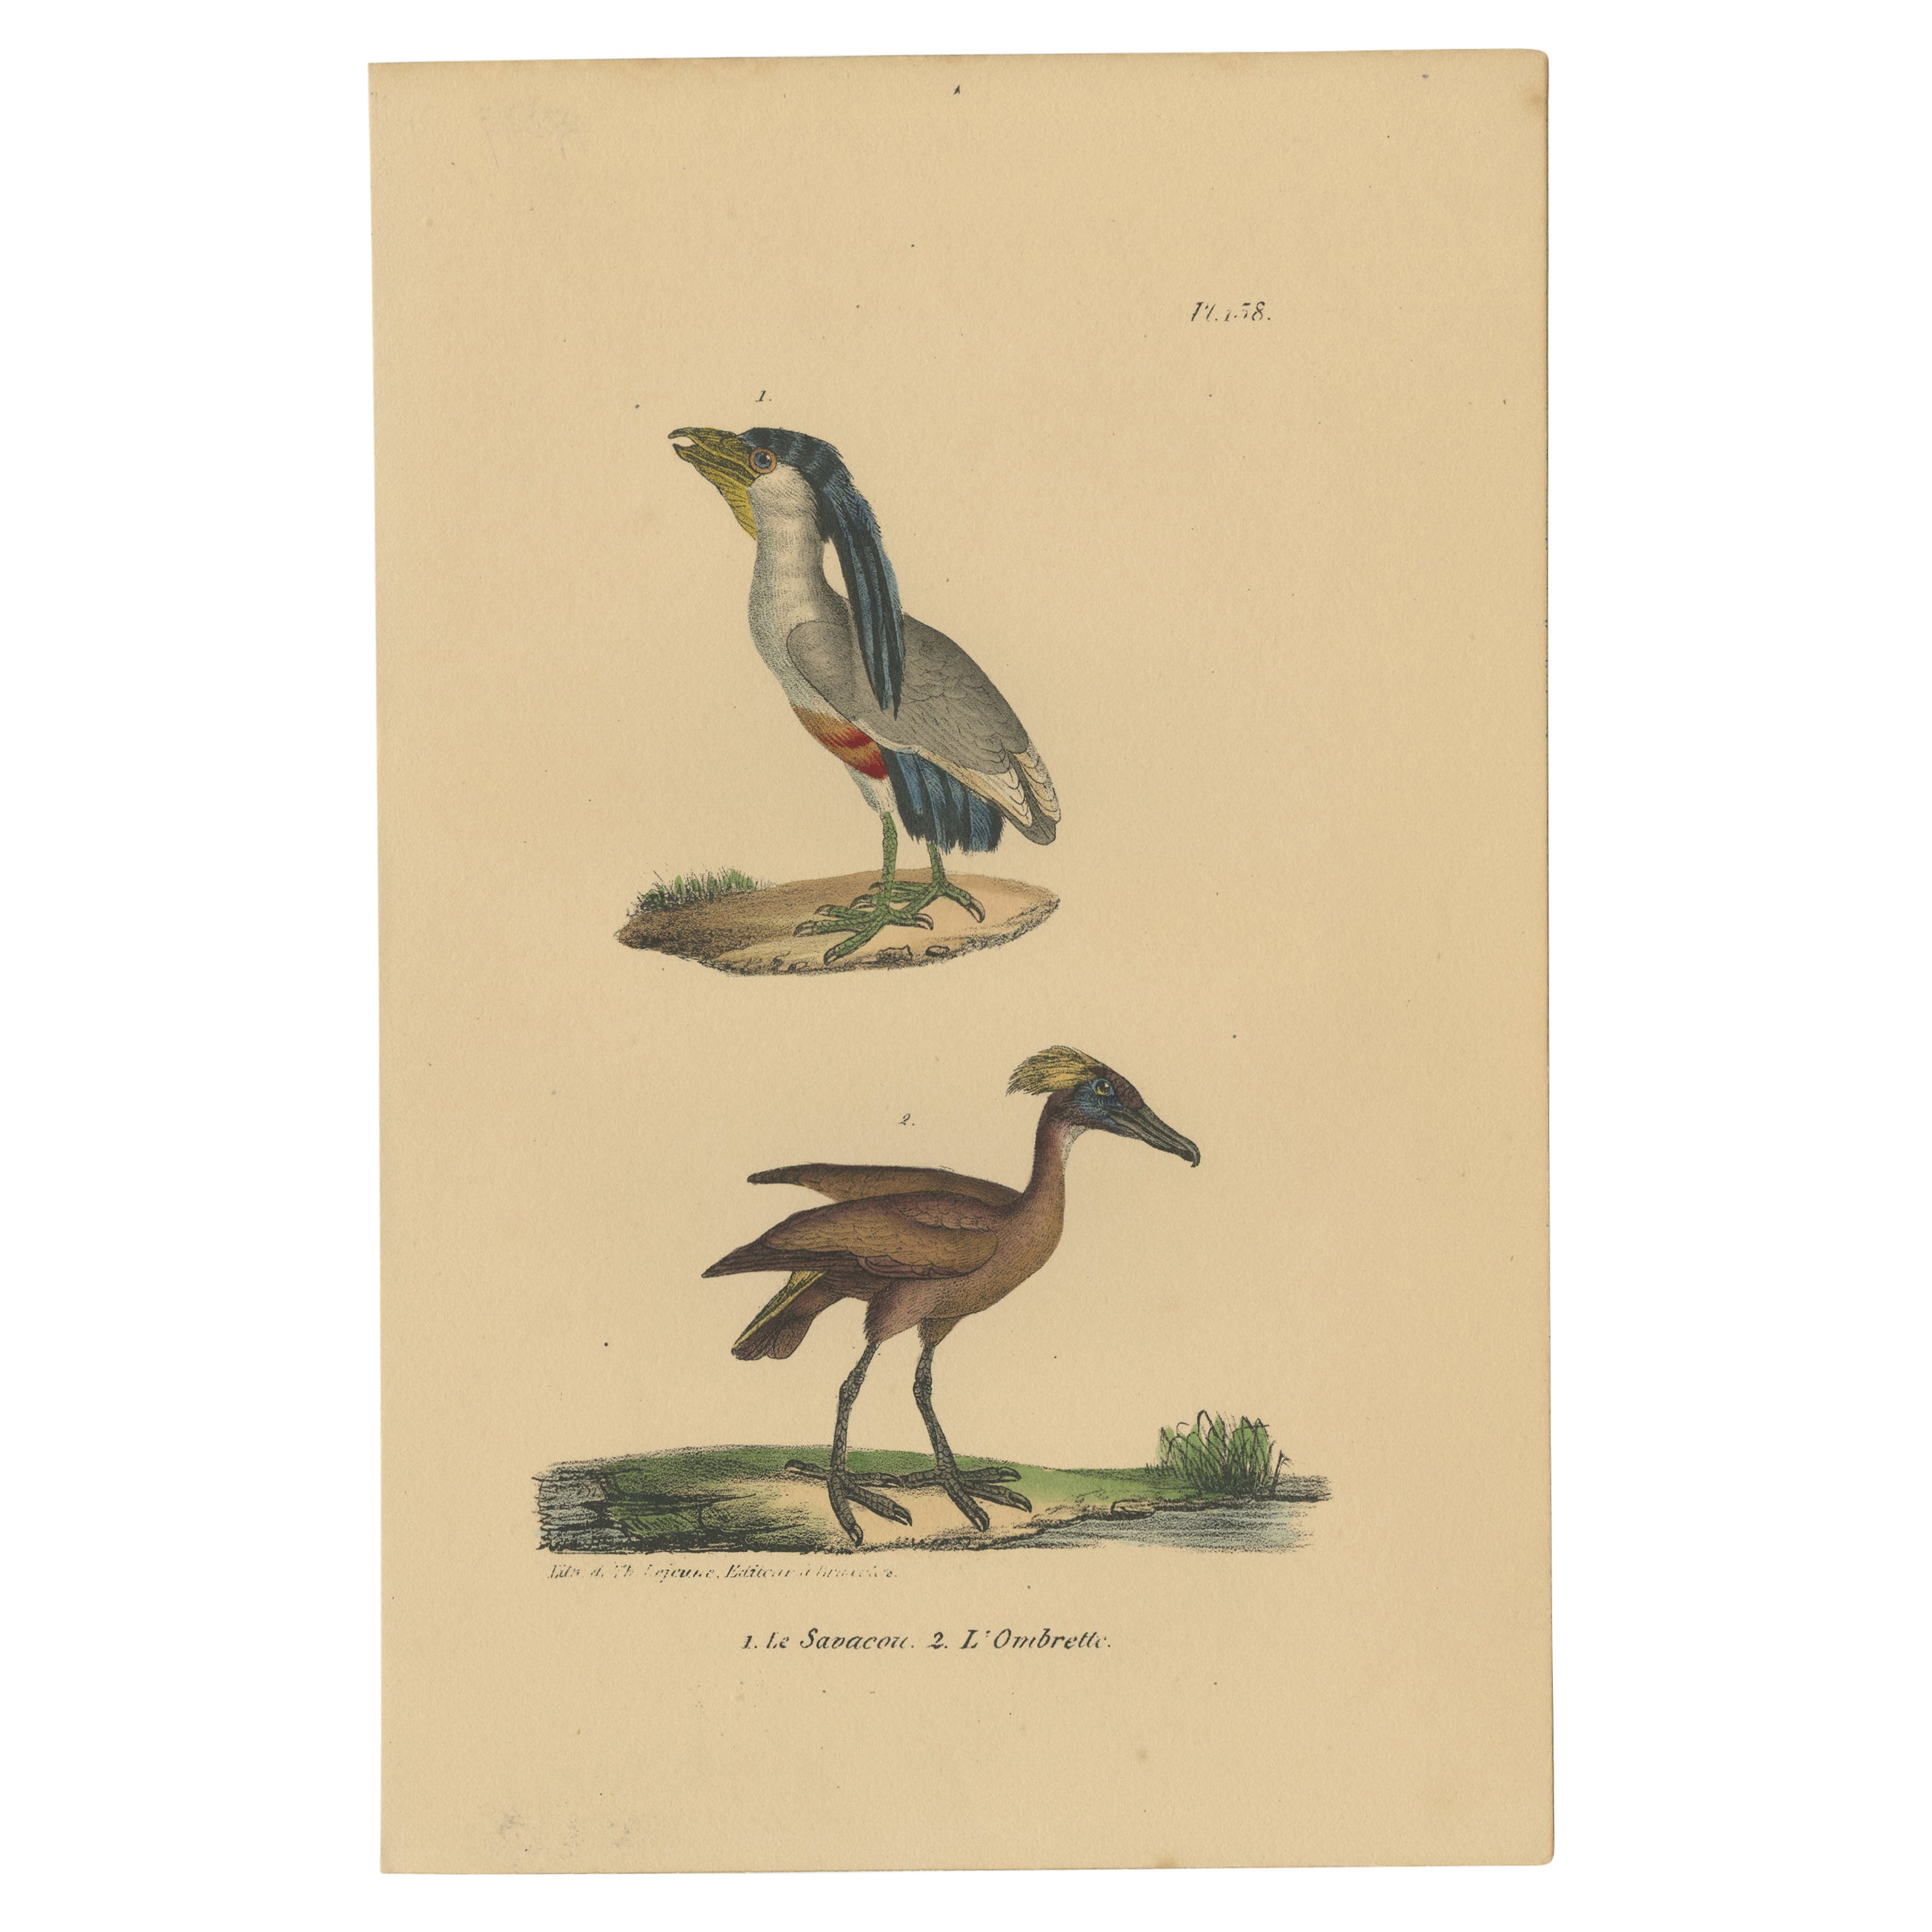 Pl. 158 Antique Bird Print of a Boat-billed Heron & Hamerkop by Lejeune 'c.1830'